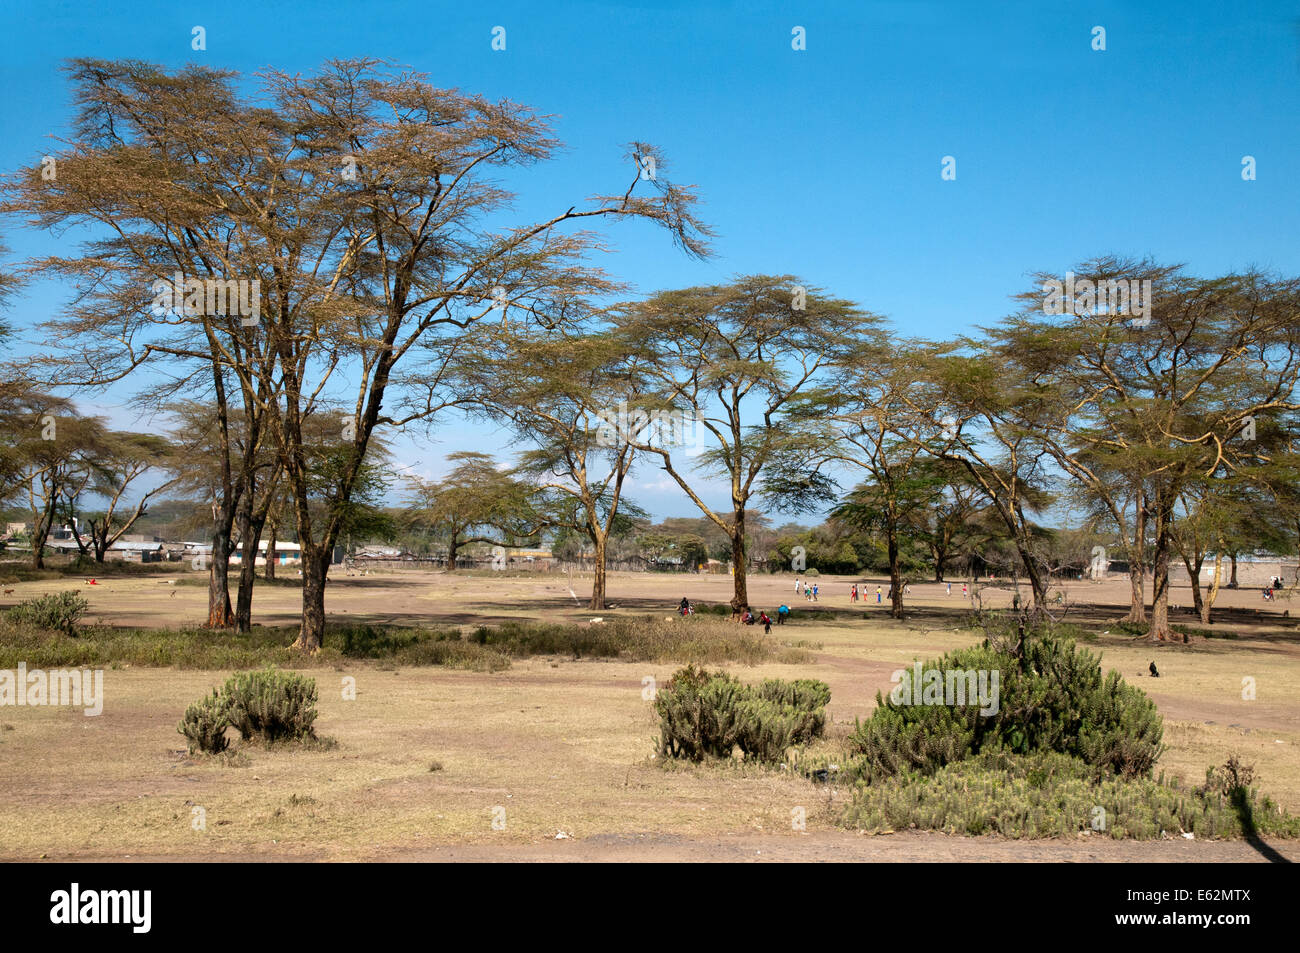 Les terrains de jeu en vertu de la fièvre jaune a aboyé acacia arbres arbres jeunes hommes jouant au football football près de Naivasha, Kenya Afrique de l'Est Y Banque D'Images